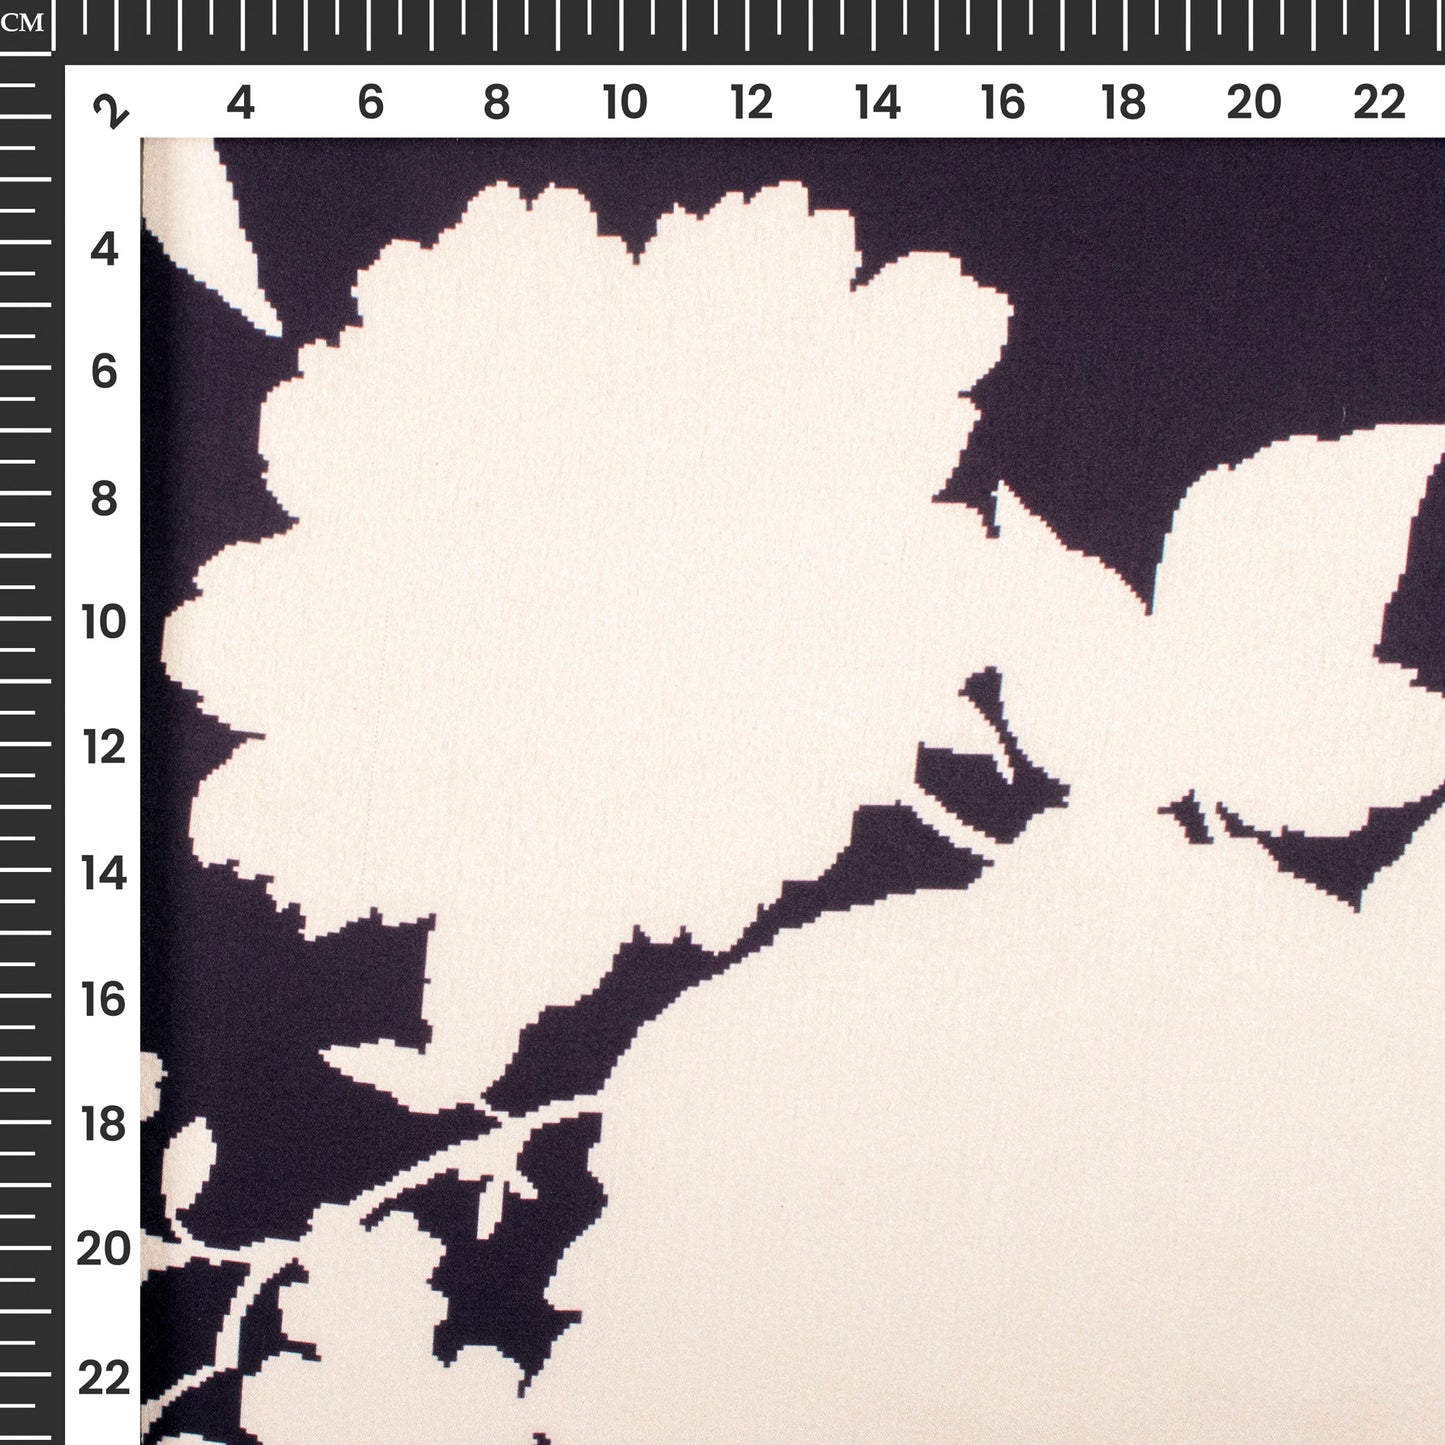 Beautiful Floral Digital Print Japan Satin Fabric